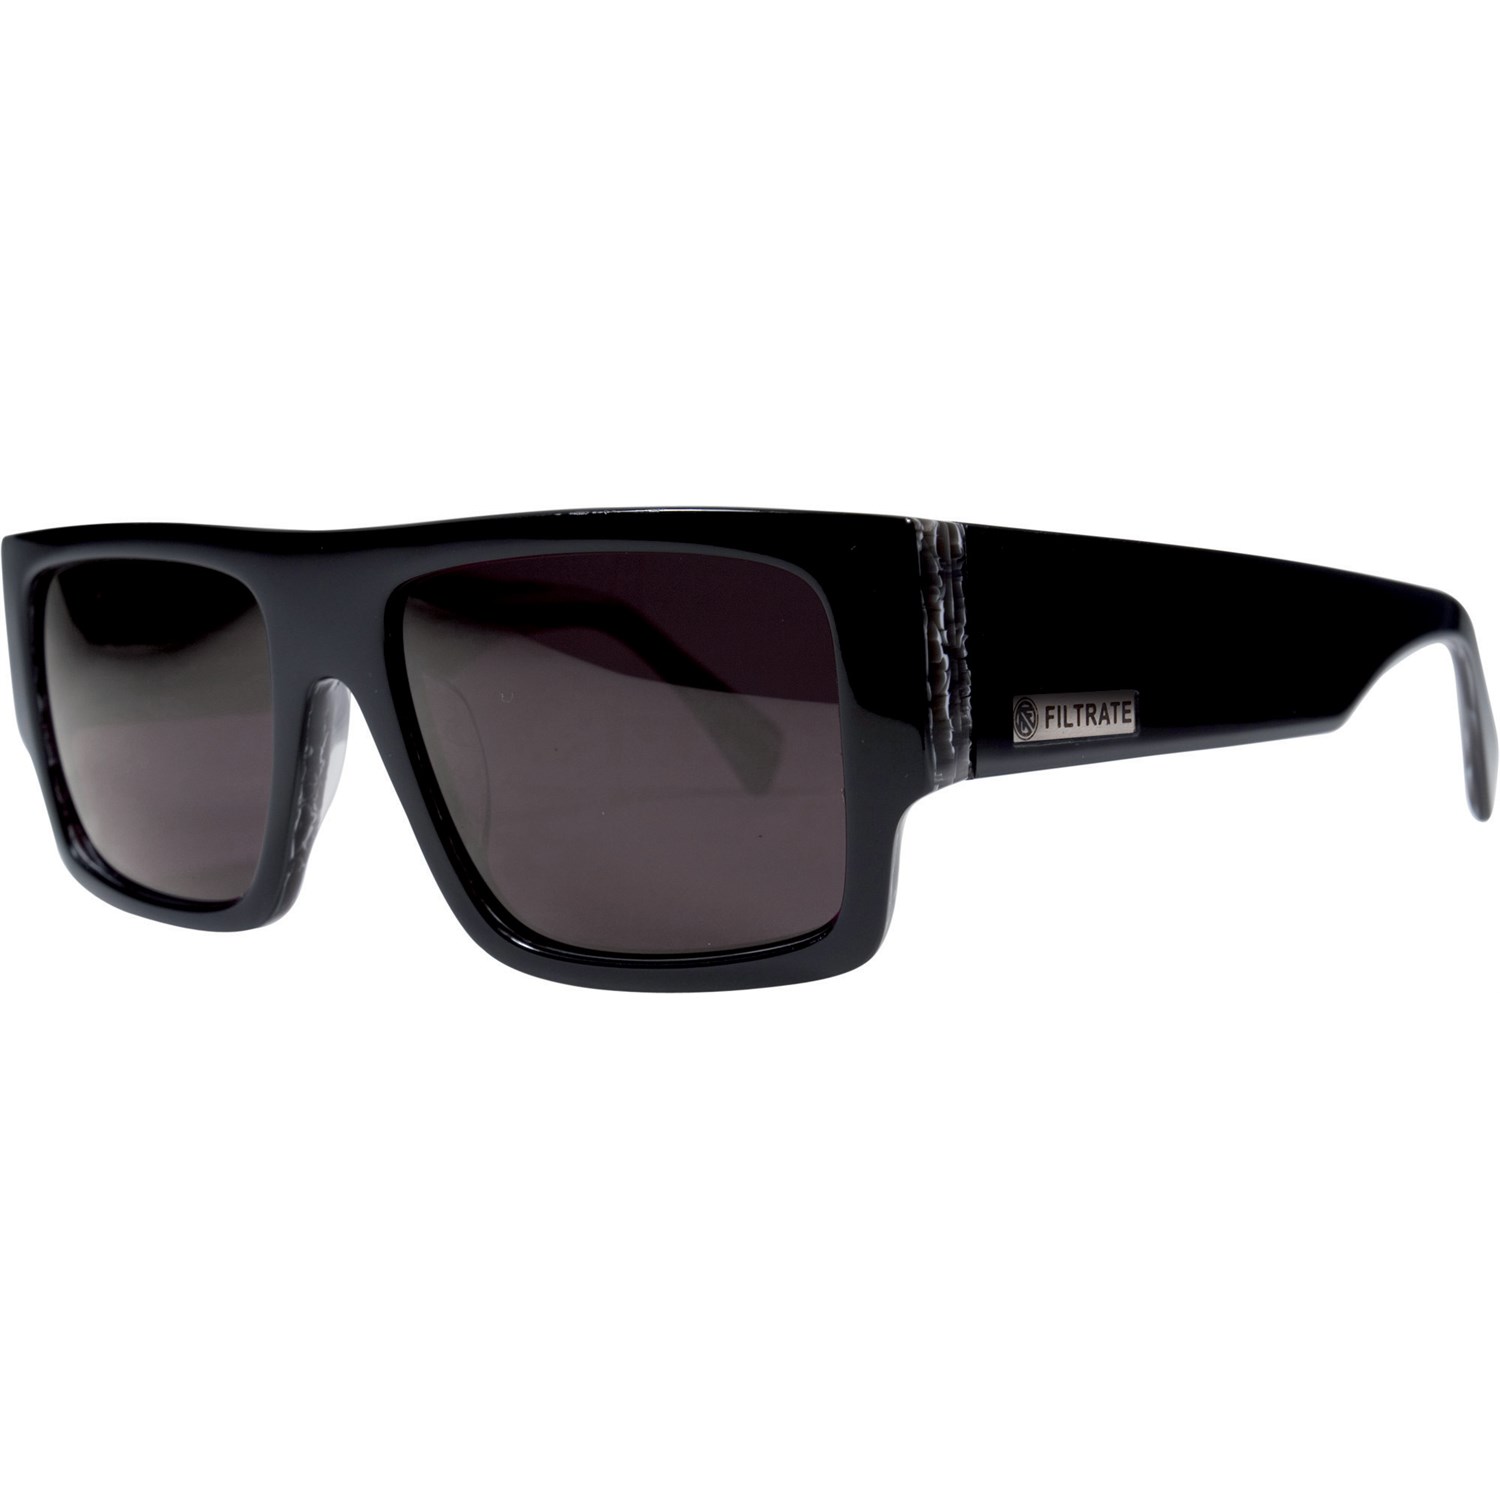 Filtrate Proper Sunglasses | evo